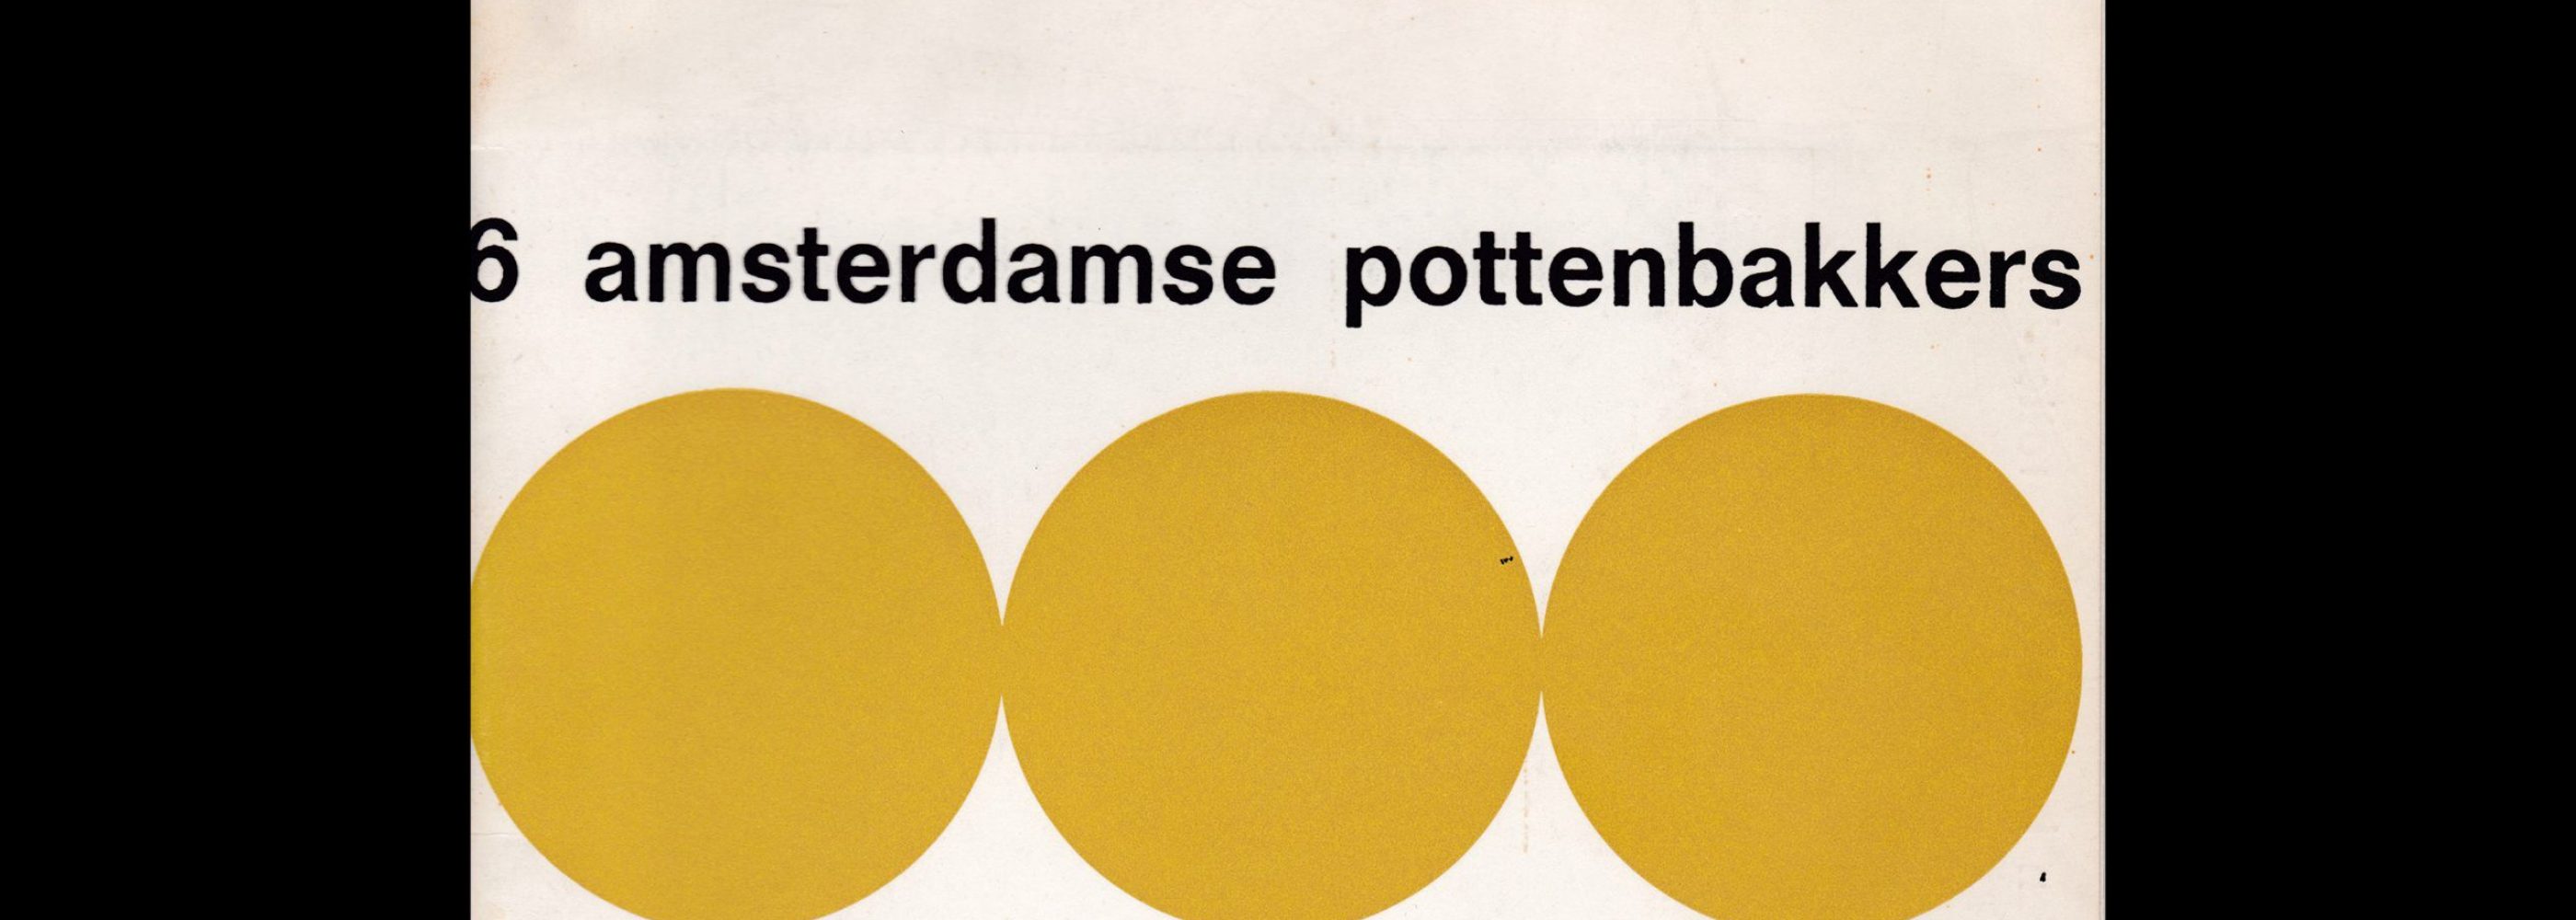 6 amsterdamse pottenbakkers designed by Benno Wissing